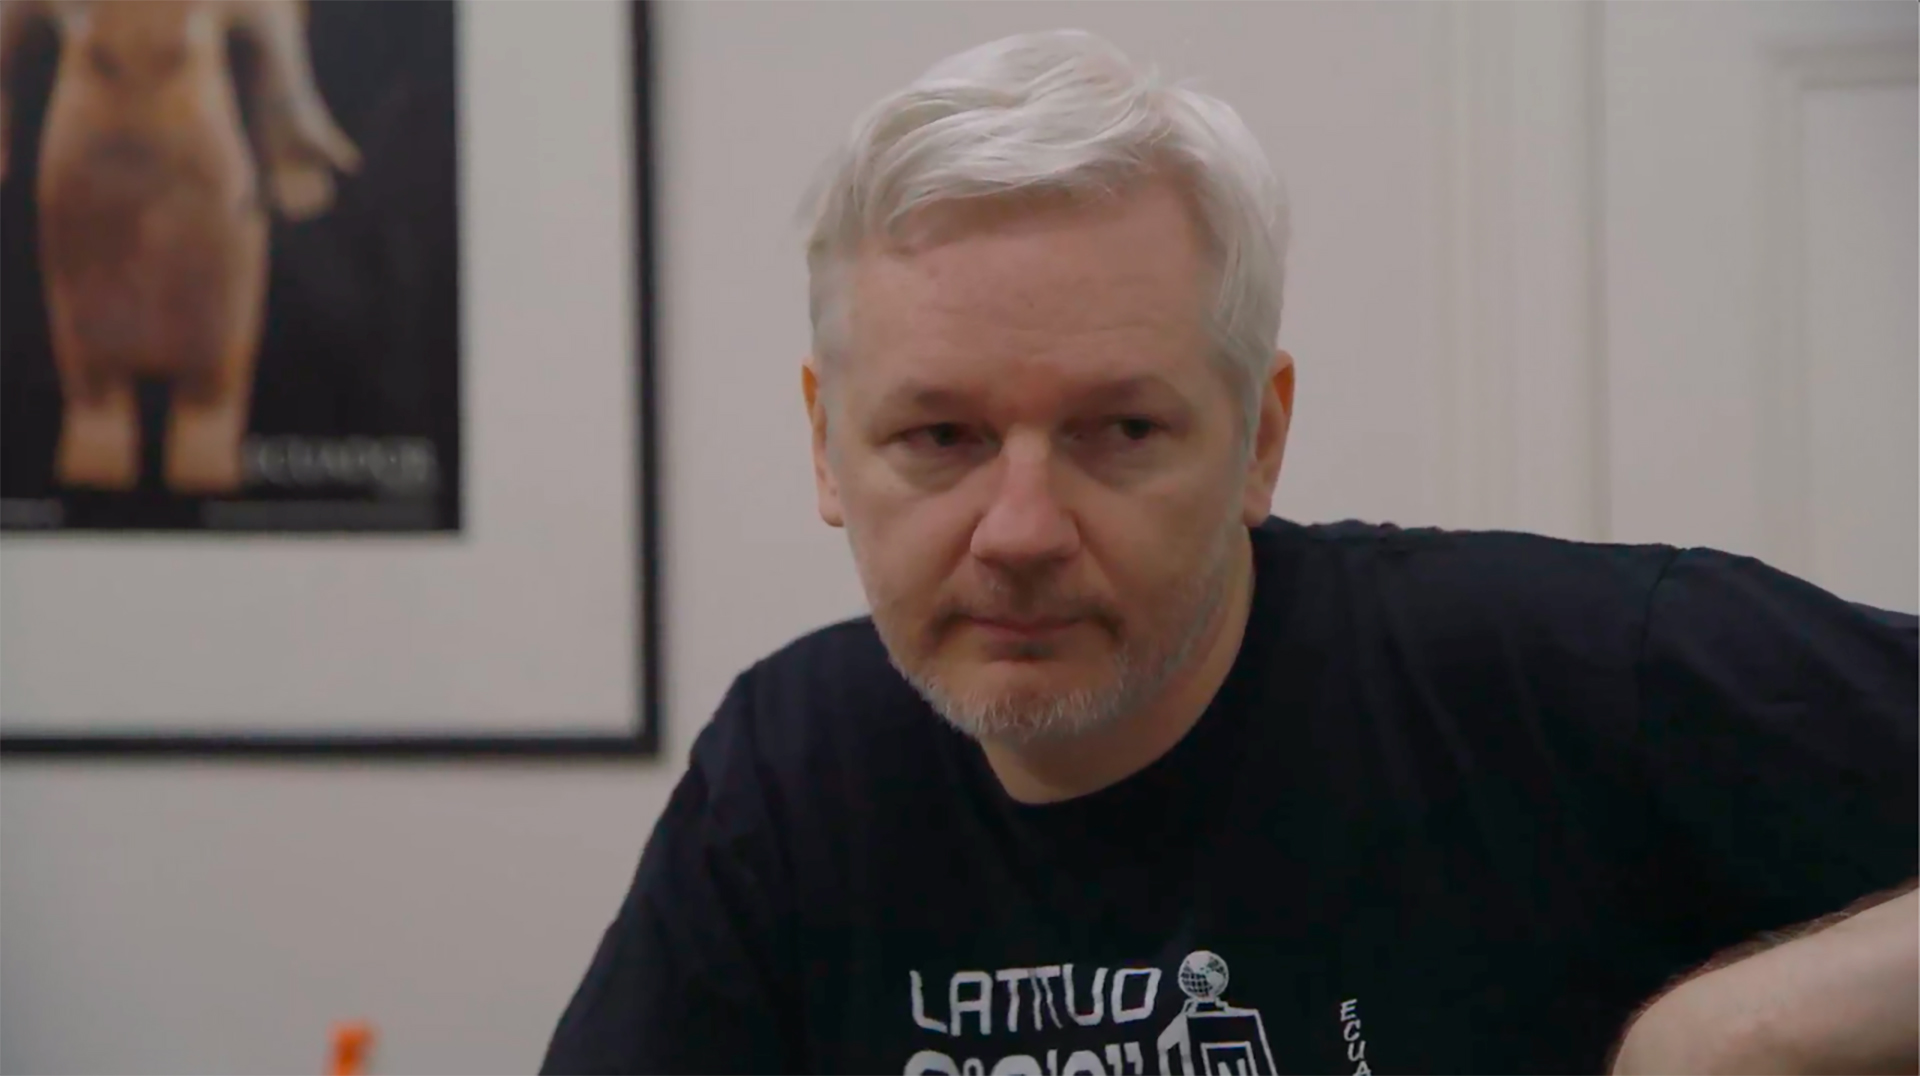 Julian Assange, protagonista de "Hacking justice", la película que abre el festival